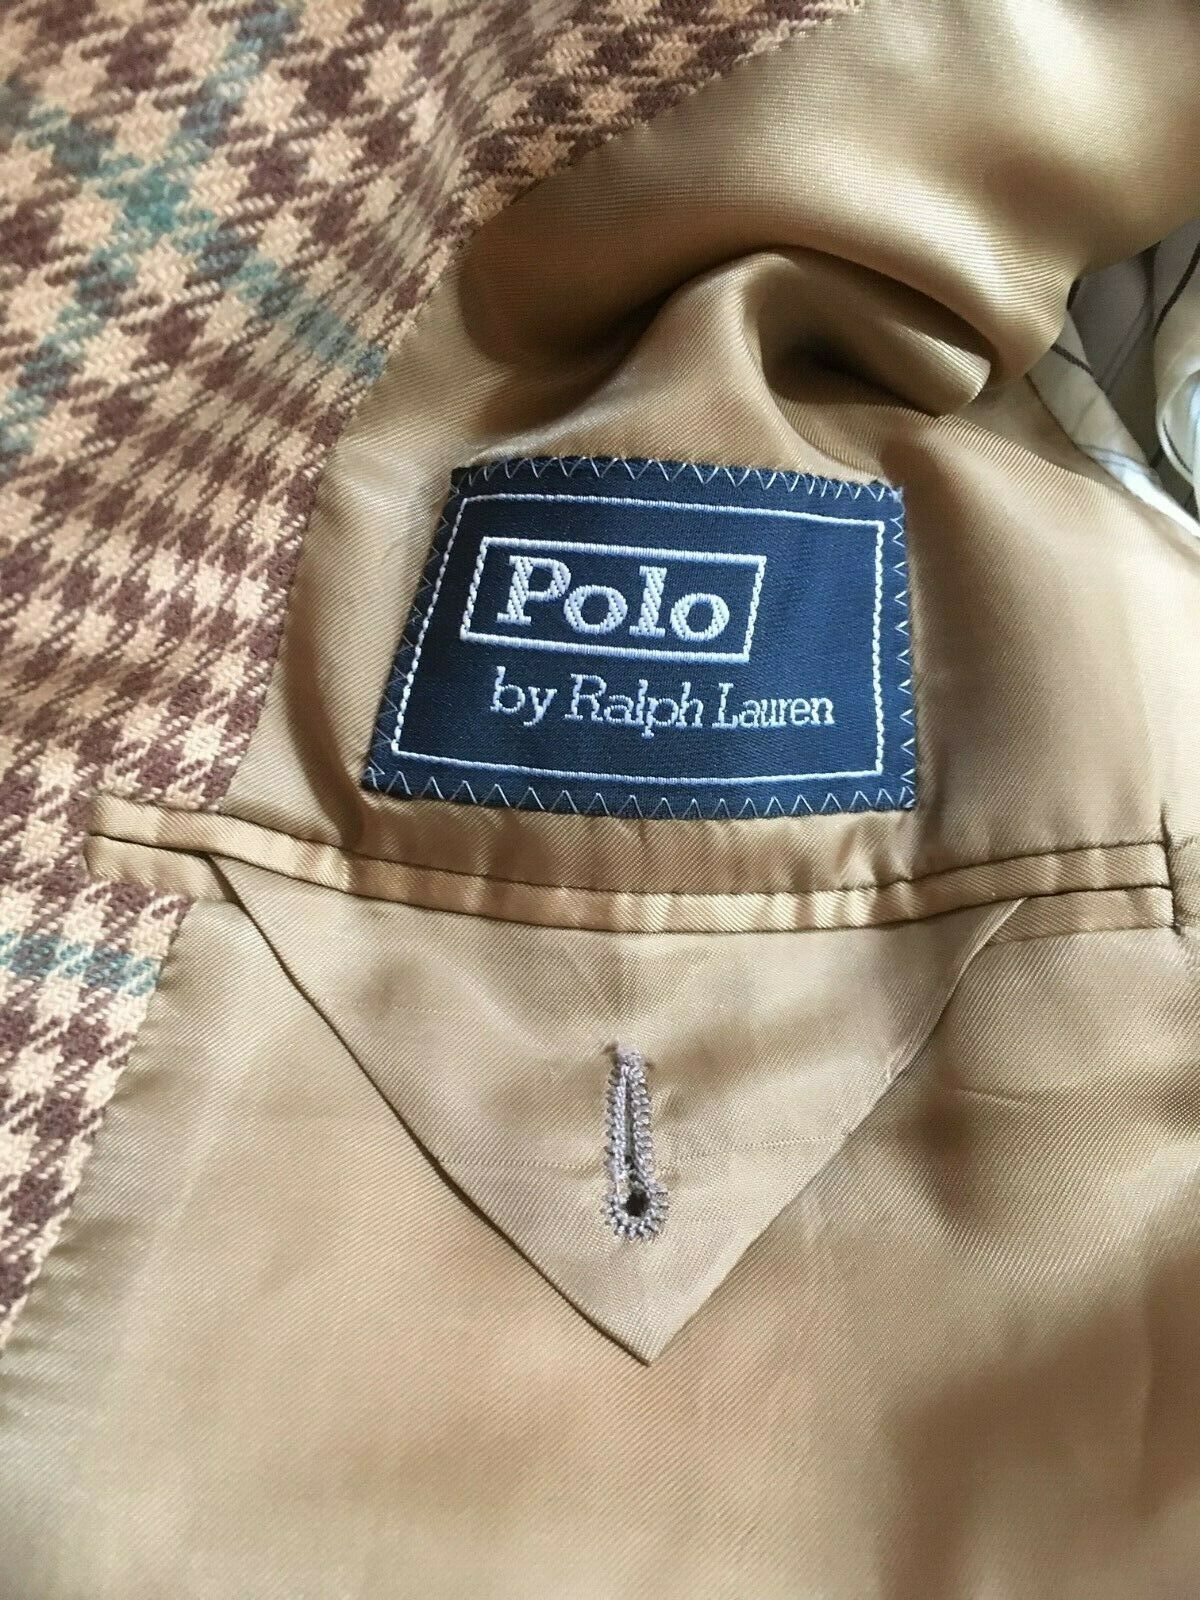 Polo-label.jpg